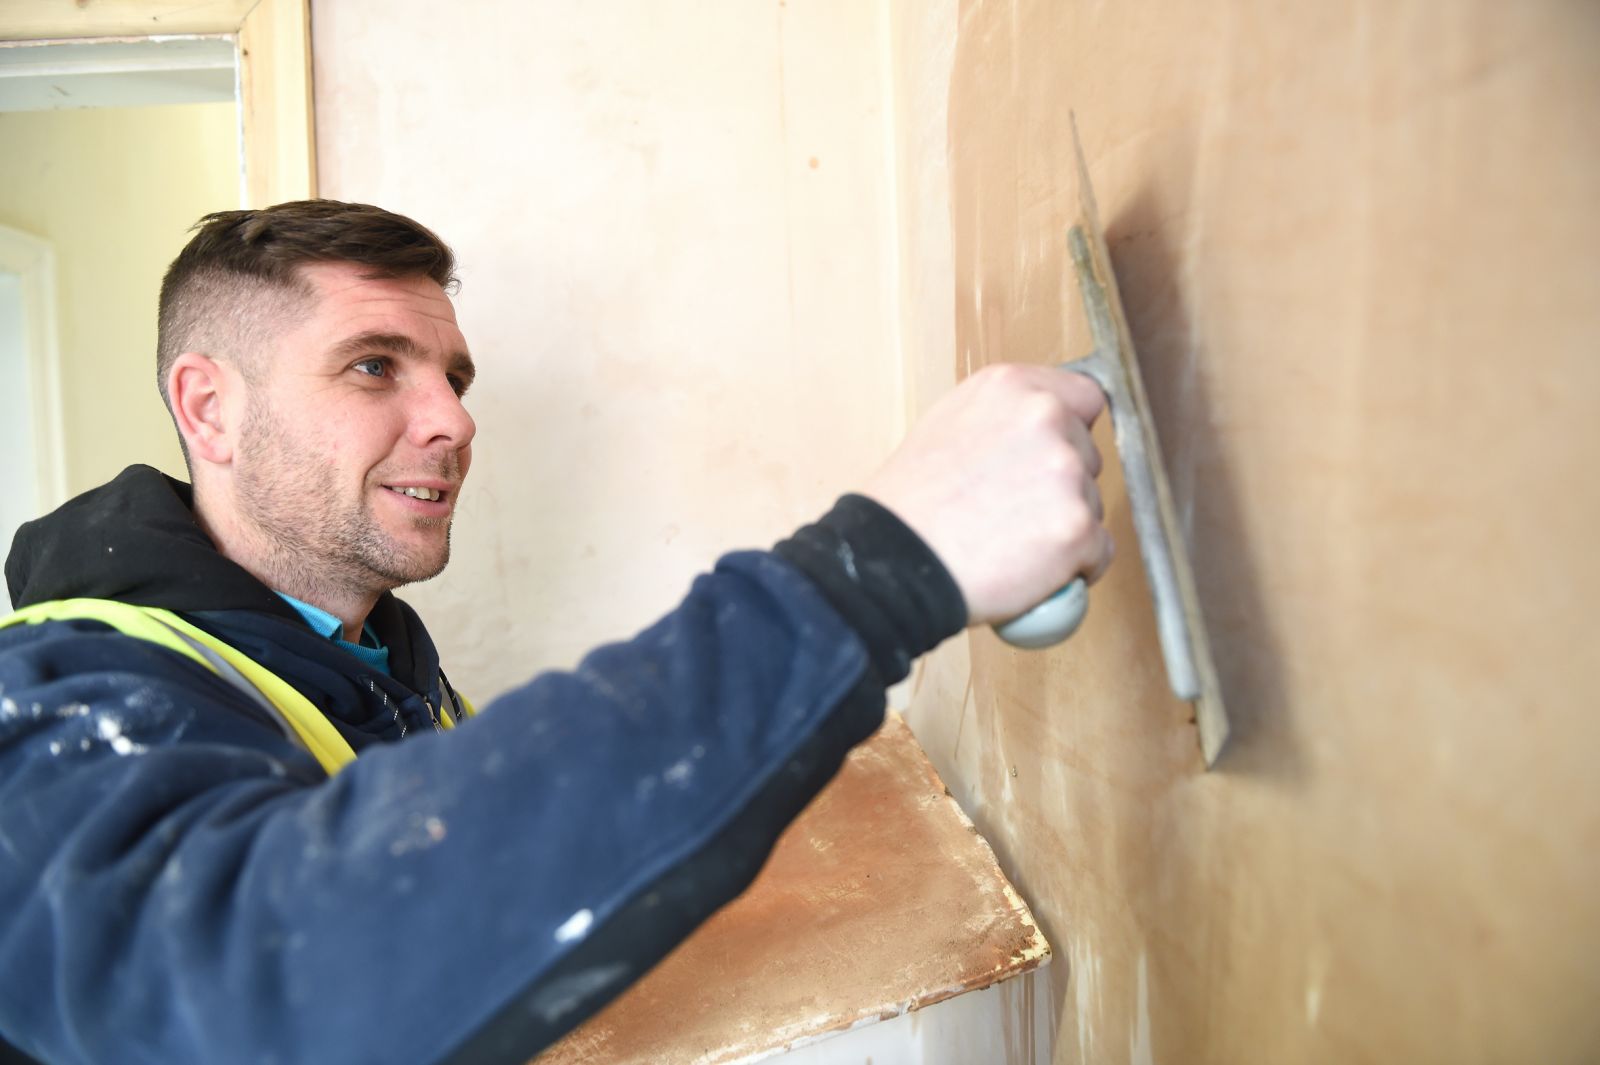 Repairs Direct staff member plastering a wall